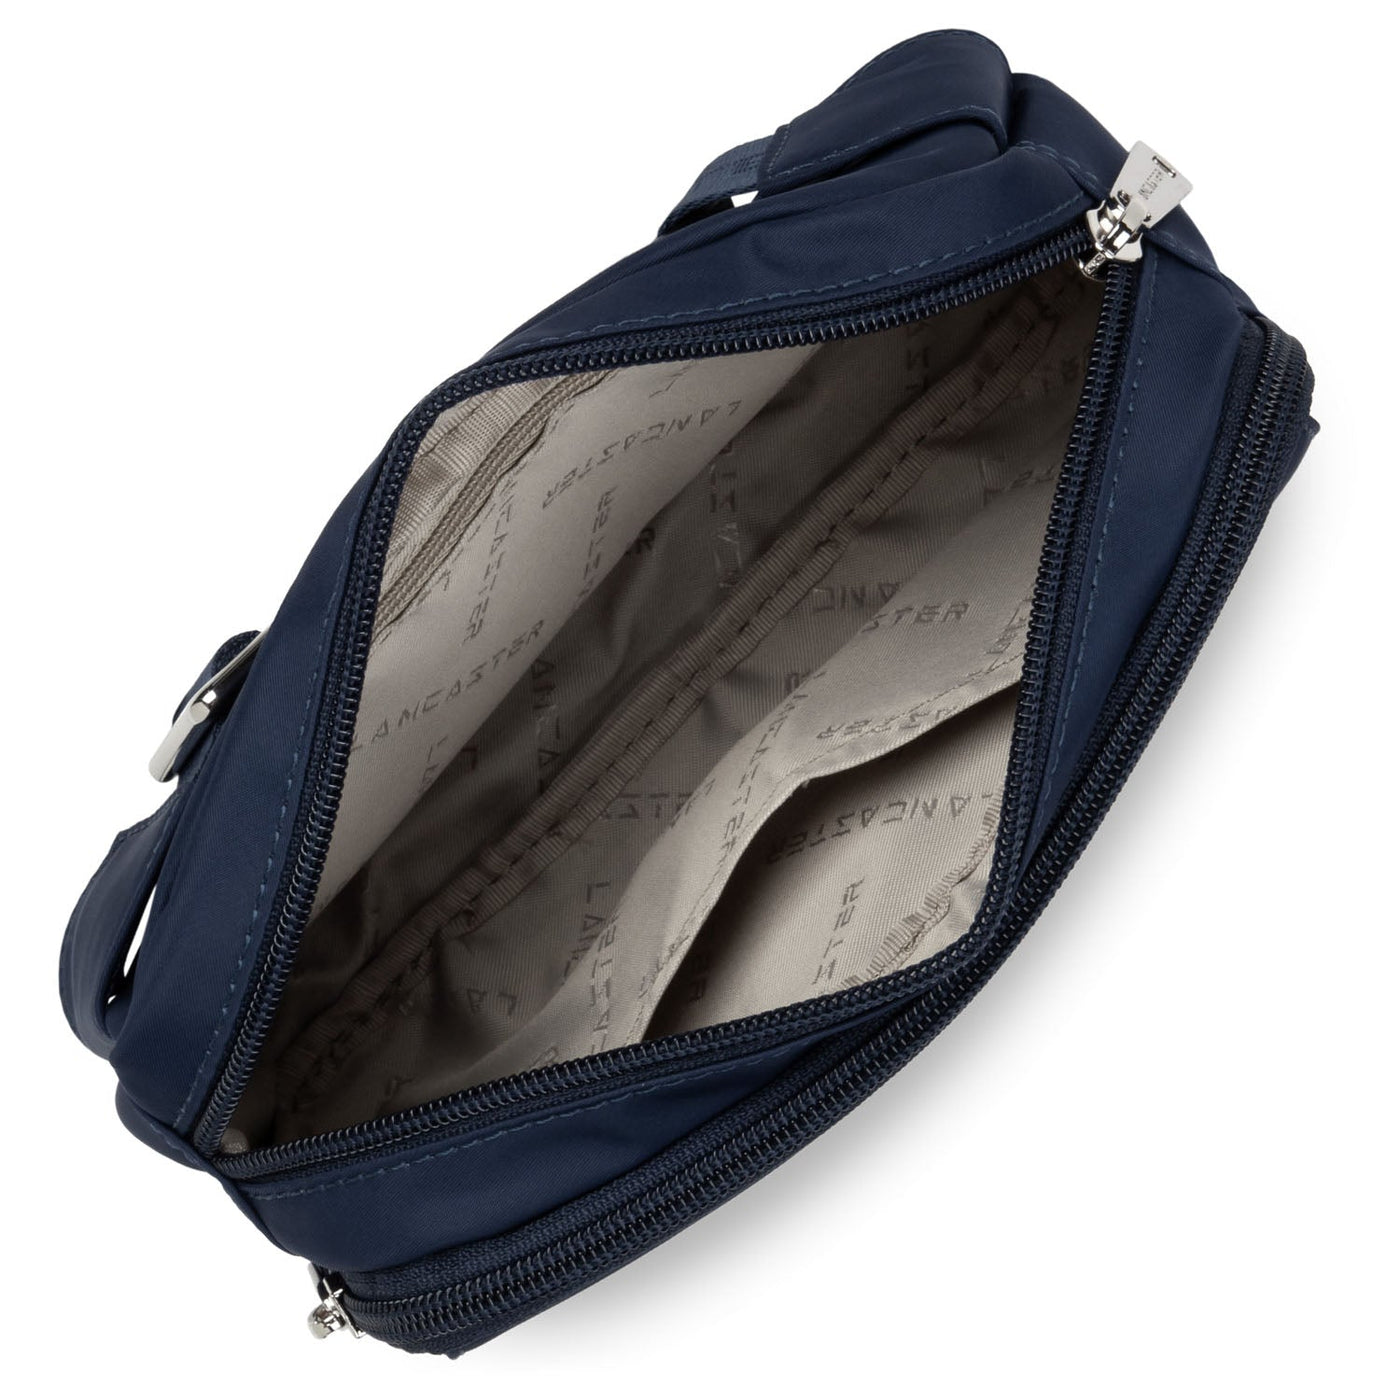 belt bag - basic verni #couleur_bleu-fonc